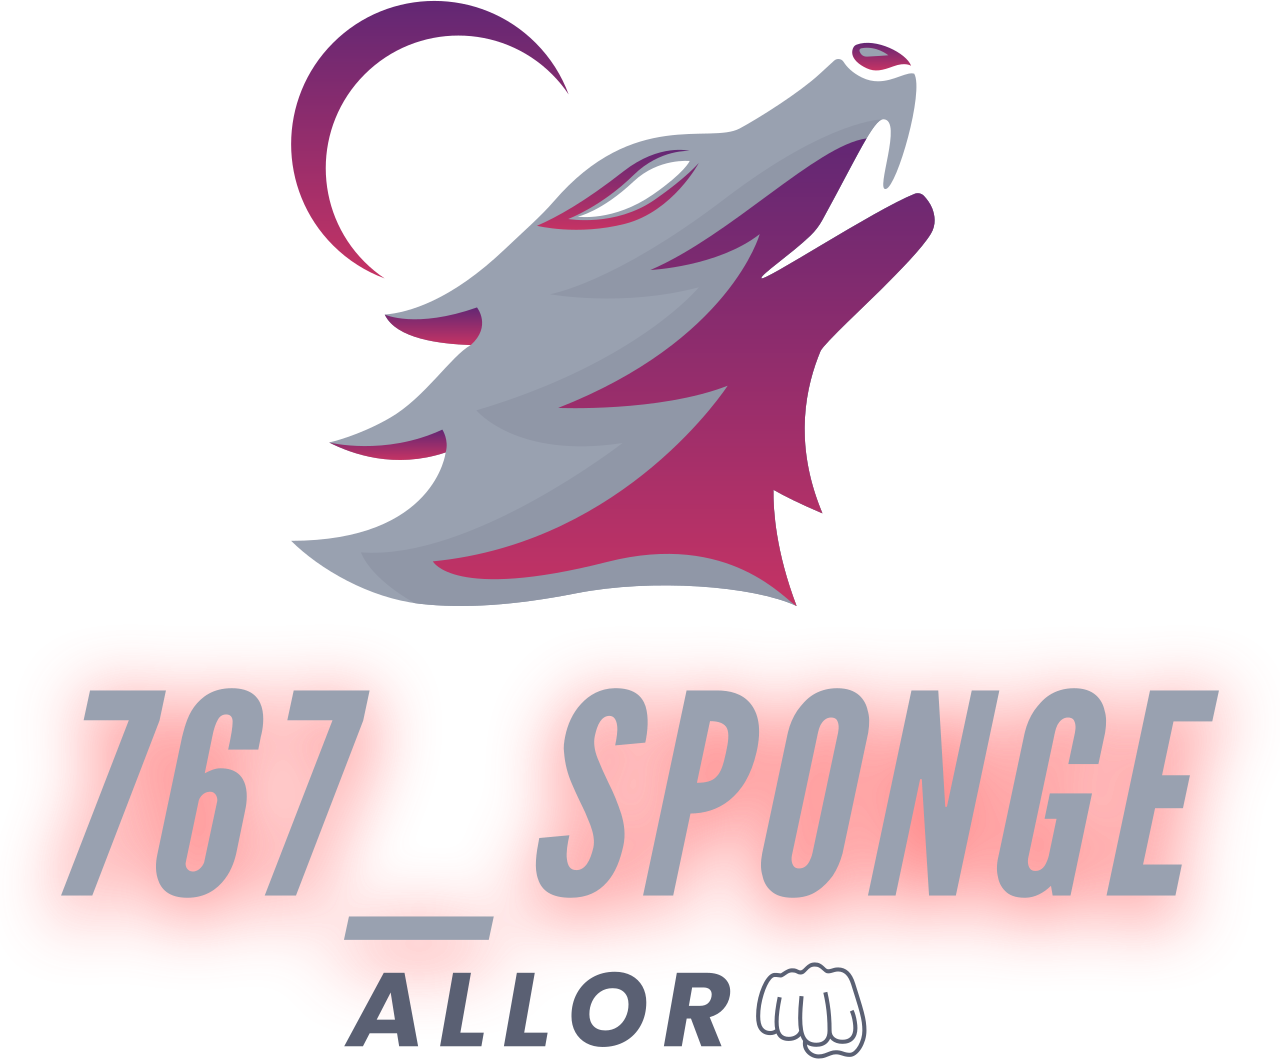 767_Sponge's logo